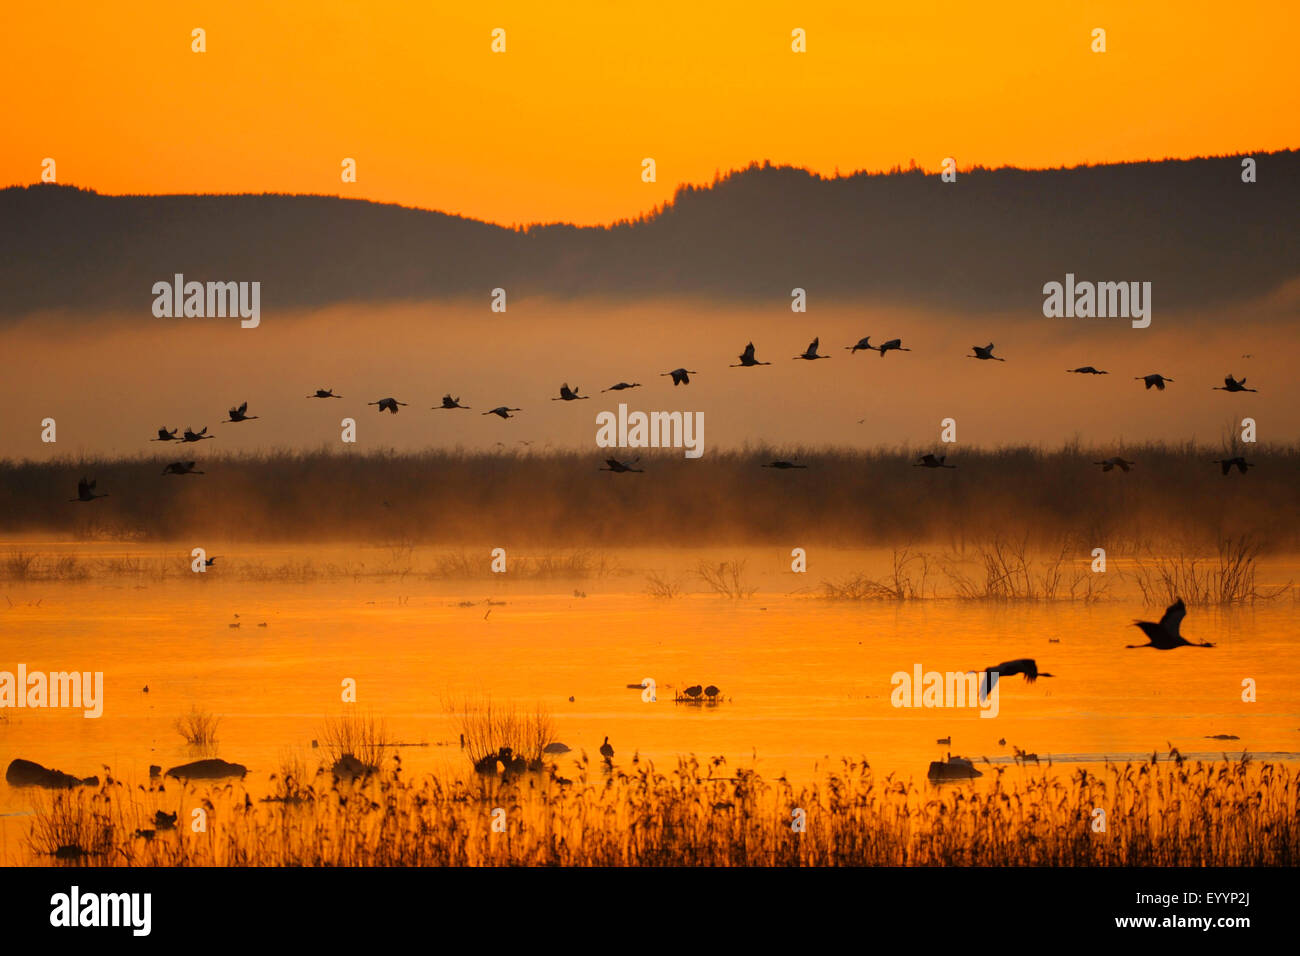 Common crane, Eurasian Crane (Grus grus), morning mood at Lake  Hornborga with flying cranes, Sweden Stock Photo